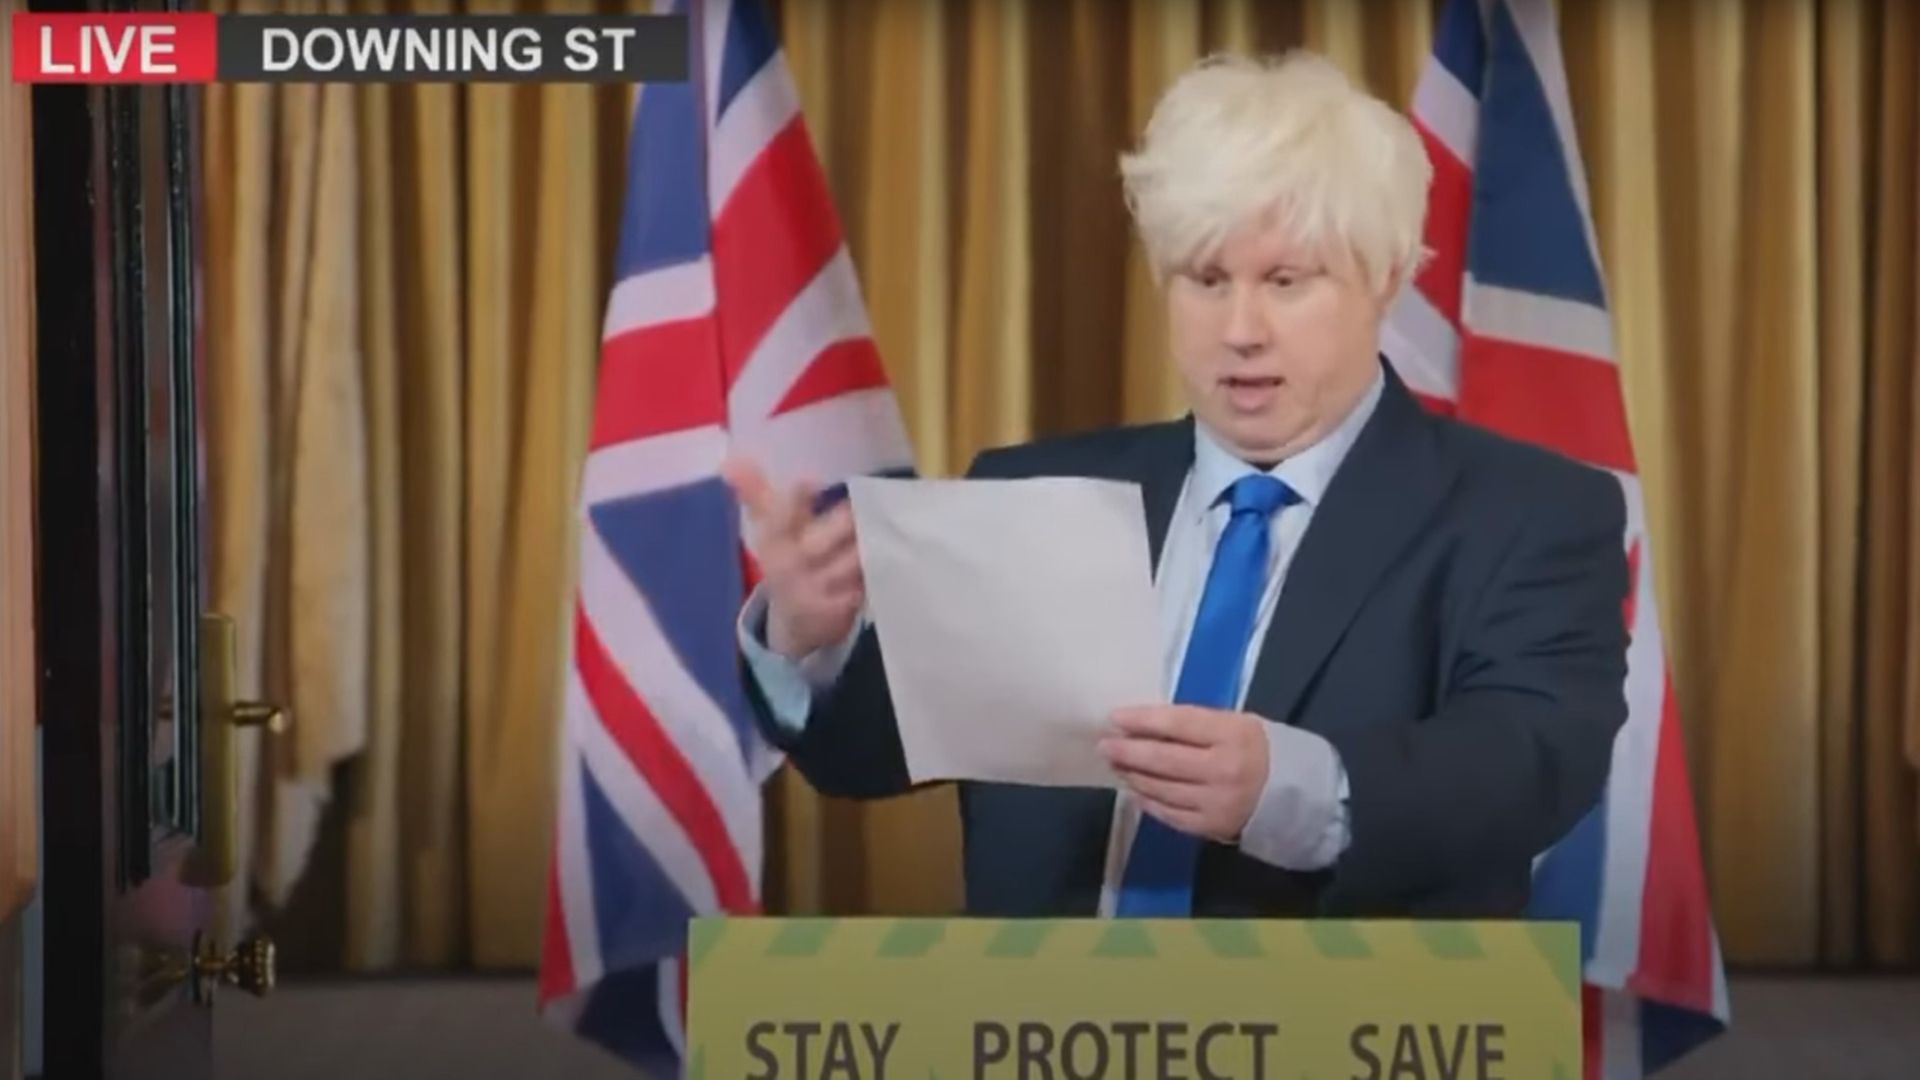 Matt Lucas parodies Boris Johnson on The Great British Bake Off. - Credit: Channel 4